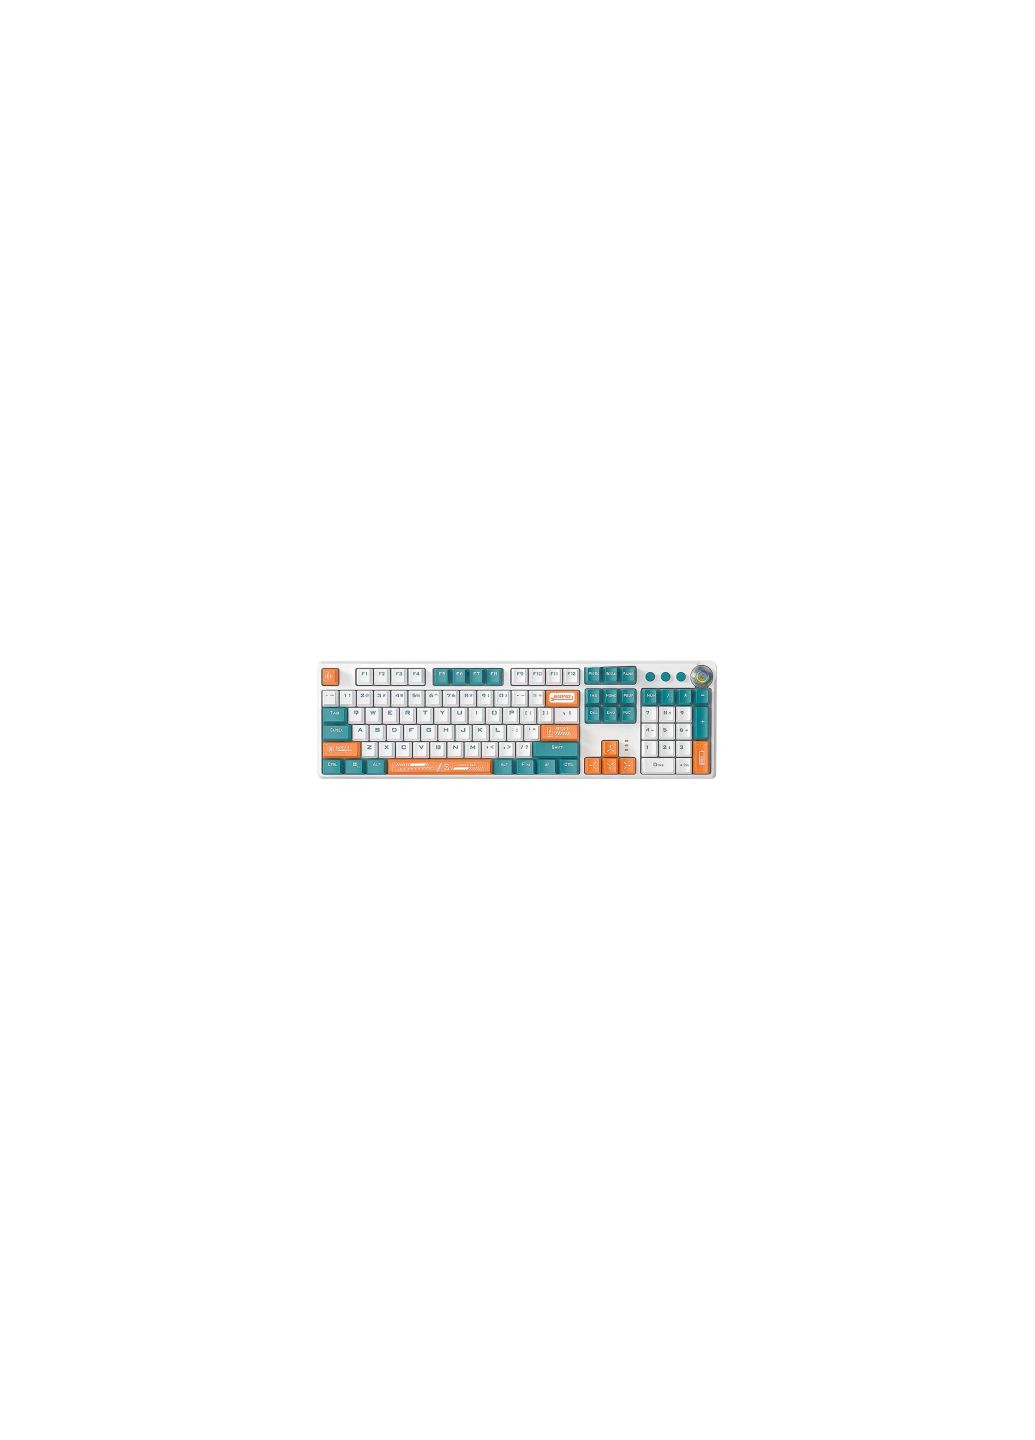 Клавиатура F2088 PRO Plus 9 Orange Keys KRGD Blue USB RU White/Blue (6948391234908) Aula f2088 pro plus 9 orange keys krgd blue usb ua whit (276707471)